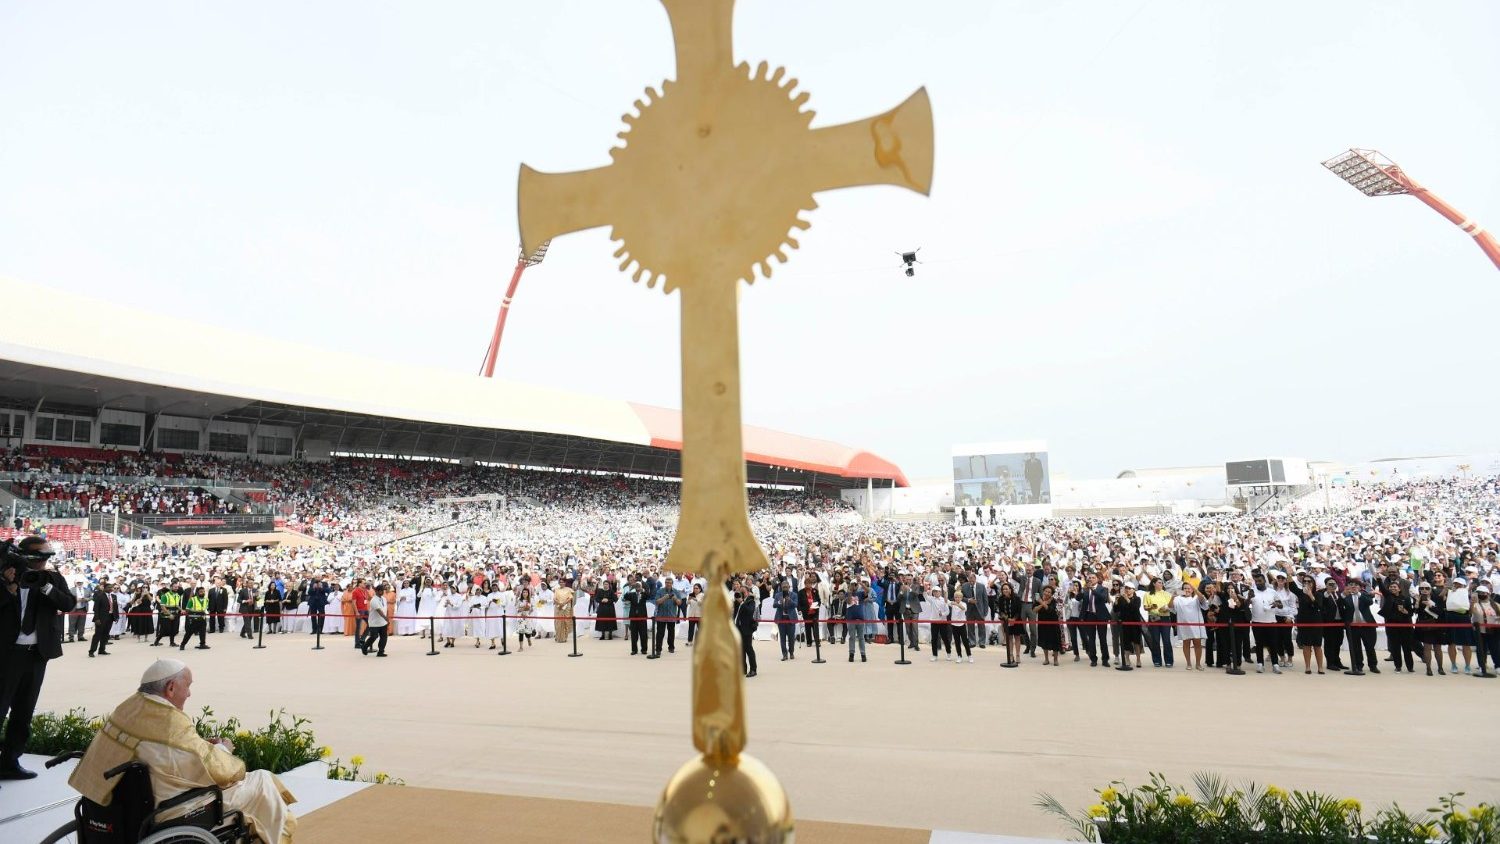 Church in Arabian Peninsula set to open Jubilee for Christian martyrs - Vatican News